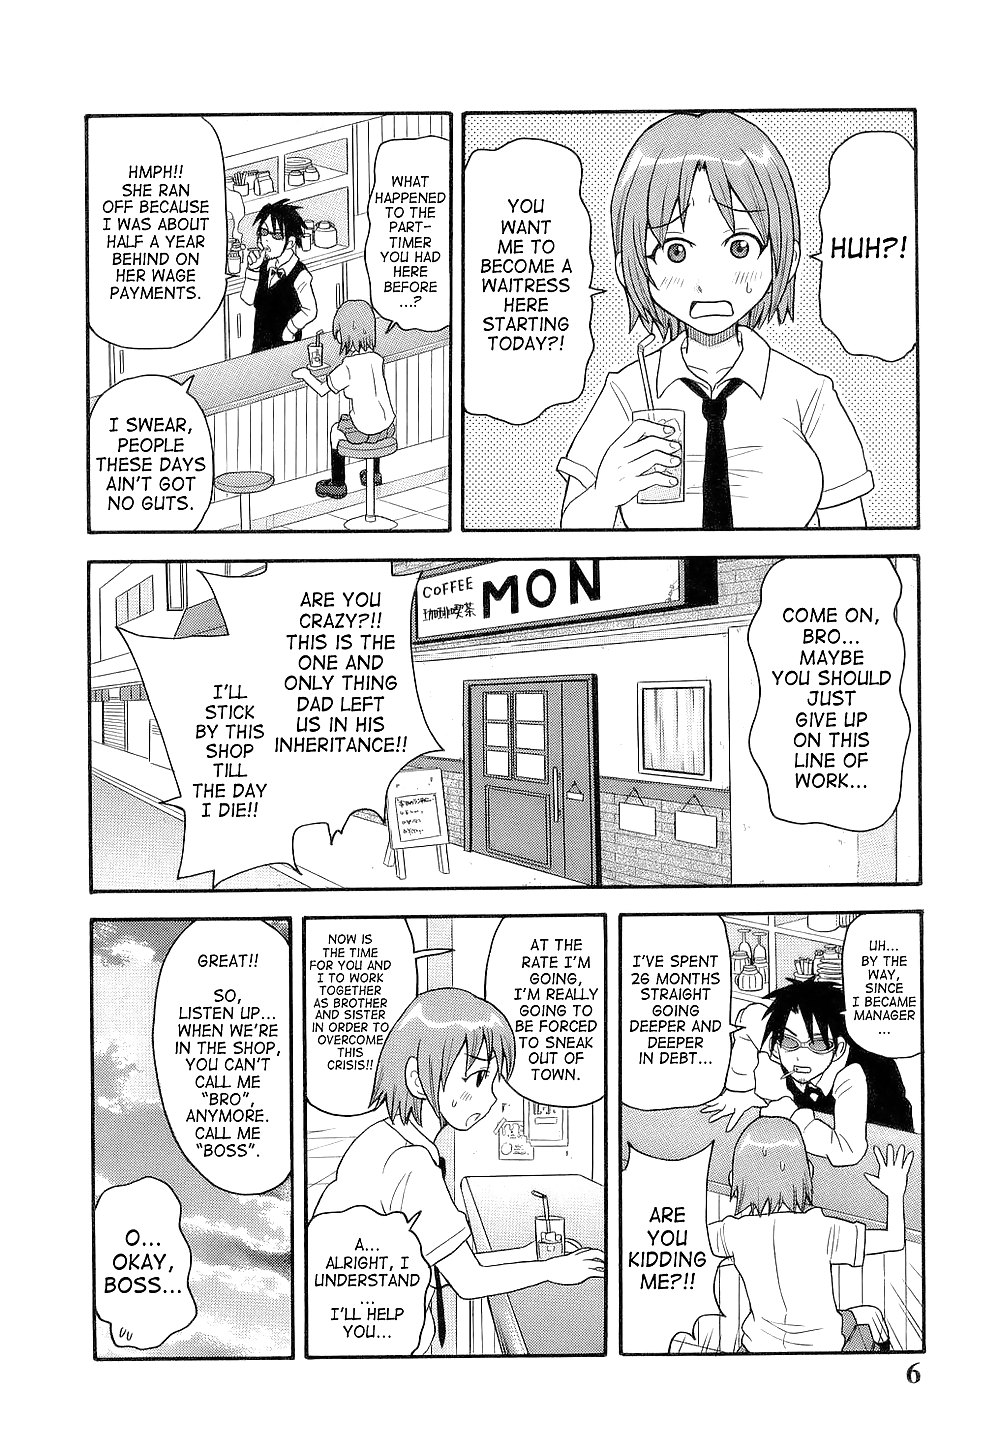 (Hentai Comic) Lassen Sie Uns Mo-Café #20836887